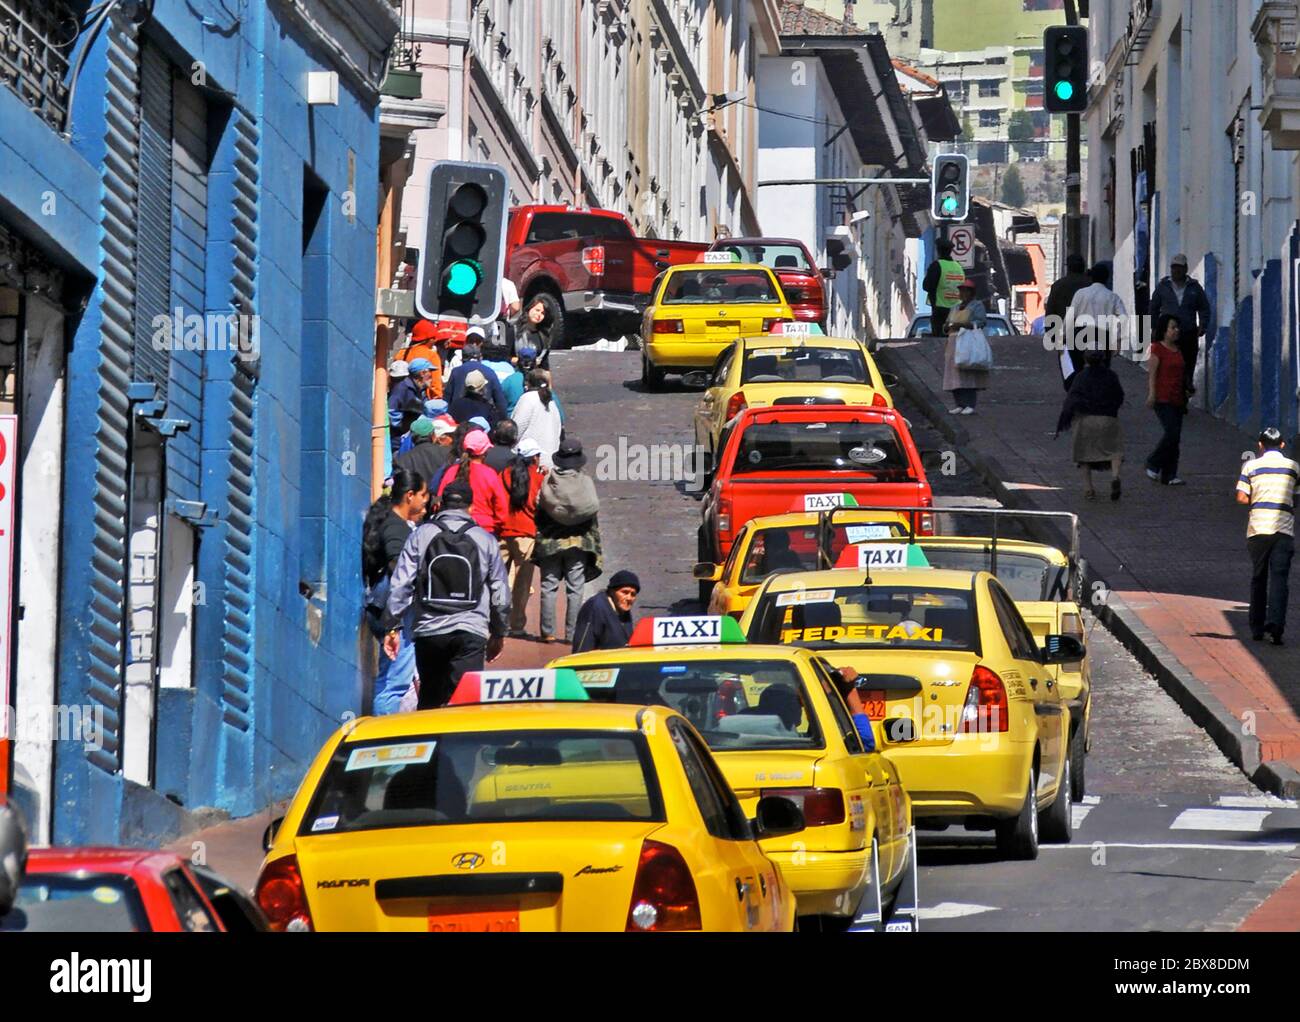 Circulation dans la rue étroite du quartier historique de Quito, Equador Banque D'Images